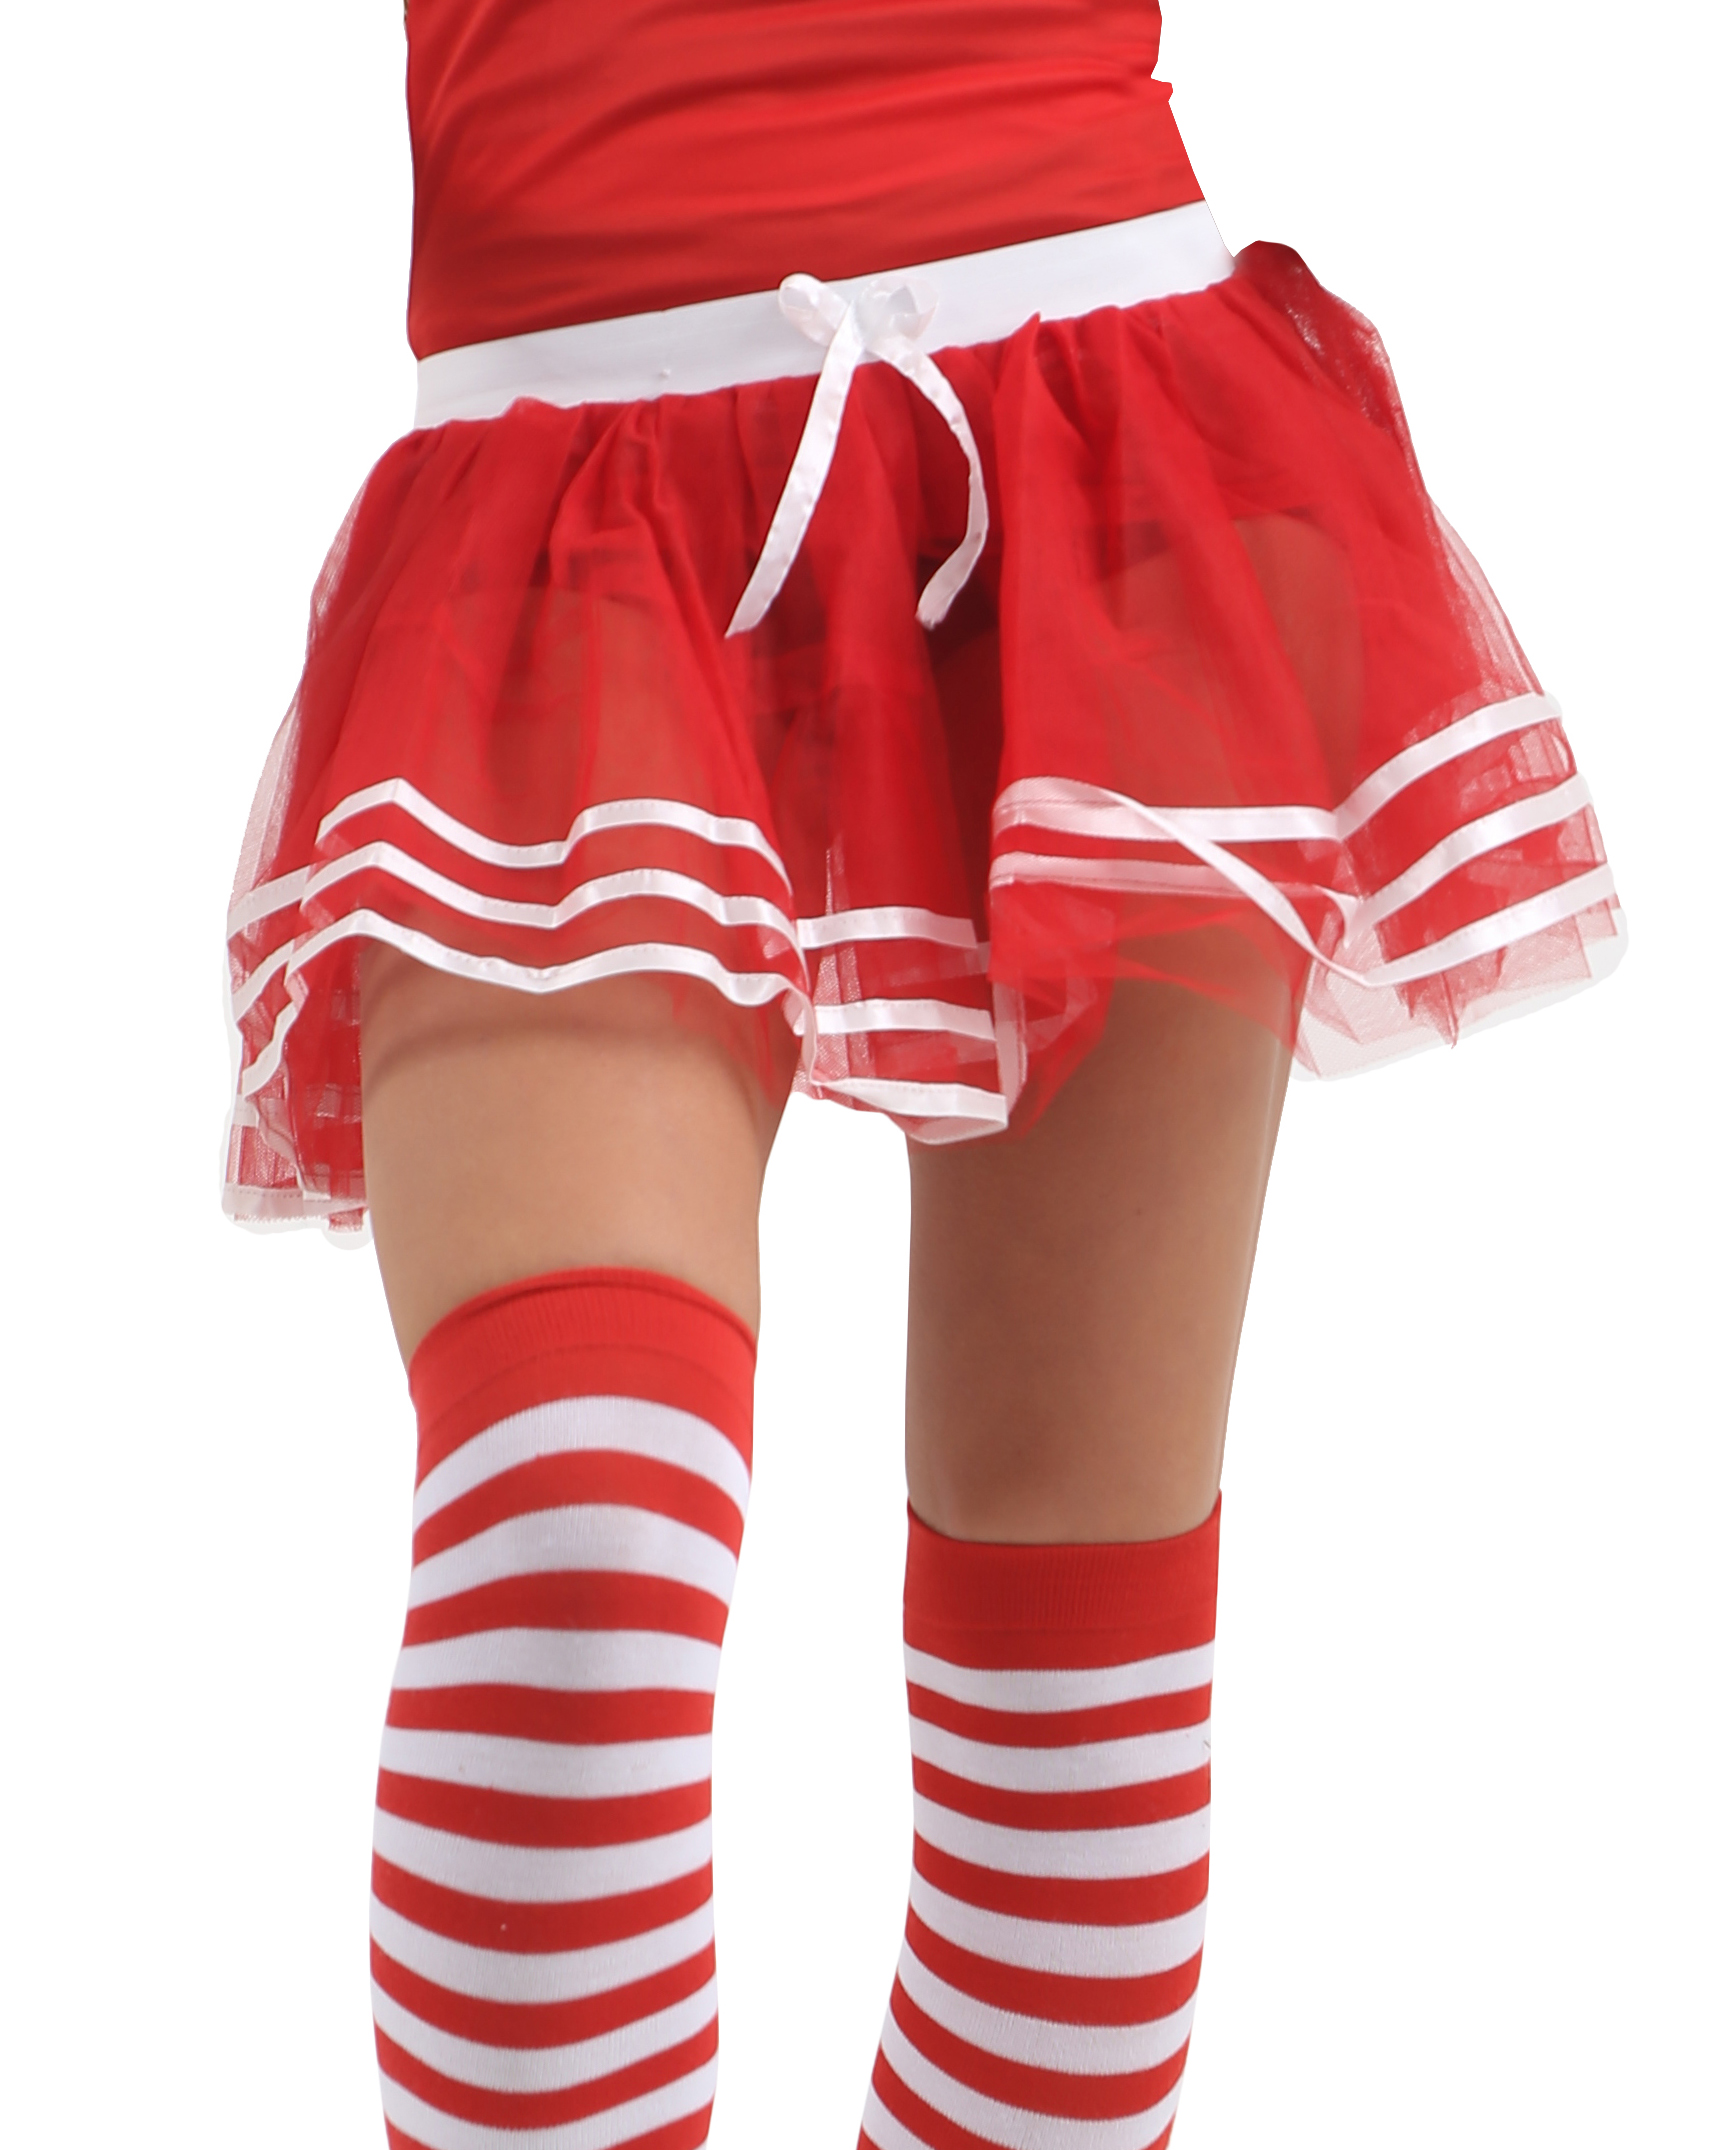 Crazy Chick Adult Cheerleader Skirt